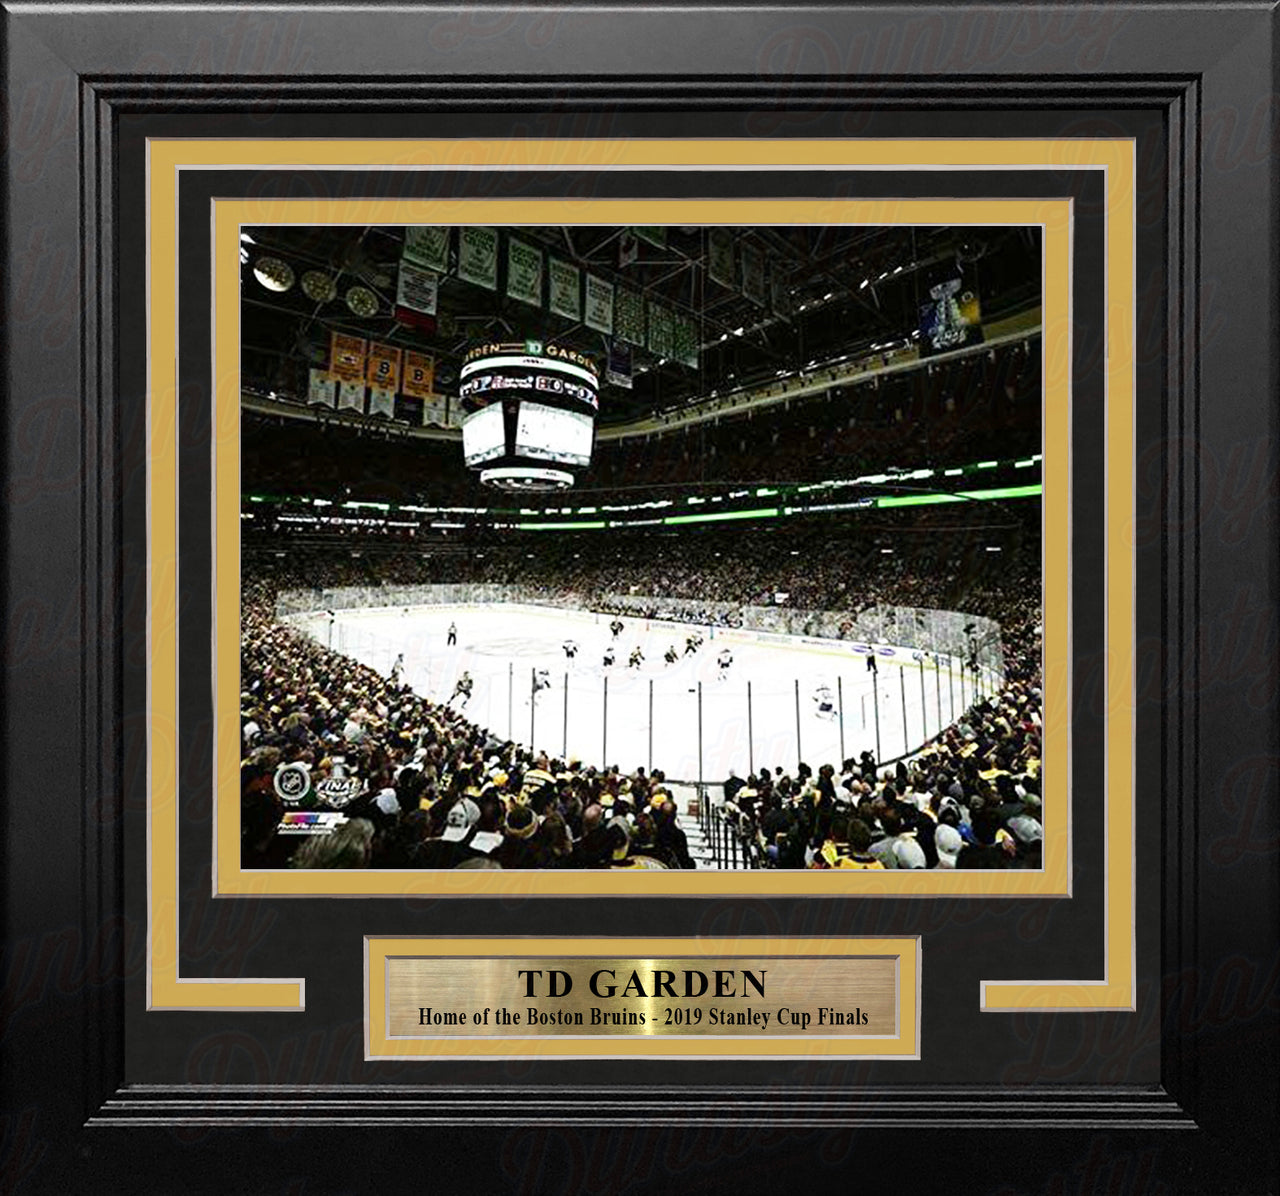 Boston Bruins TD Garden 2019 Stanley Cup Finals 8" x 10" Framed Hockey Stadium Photo - Dynasty Sports & Framing 